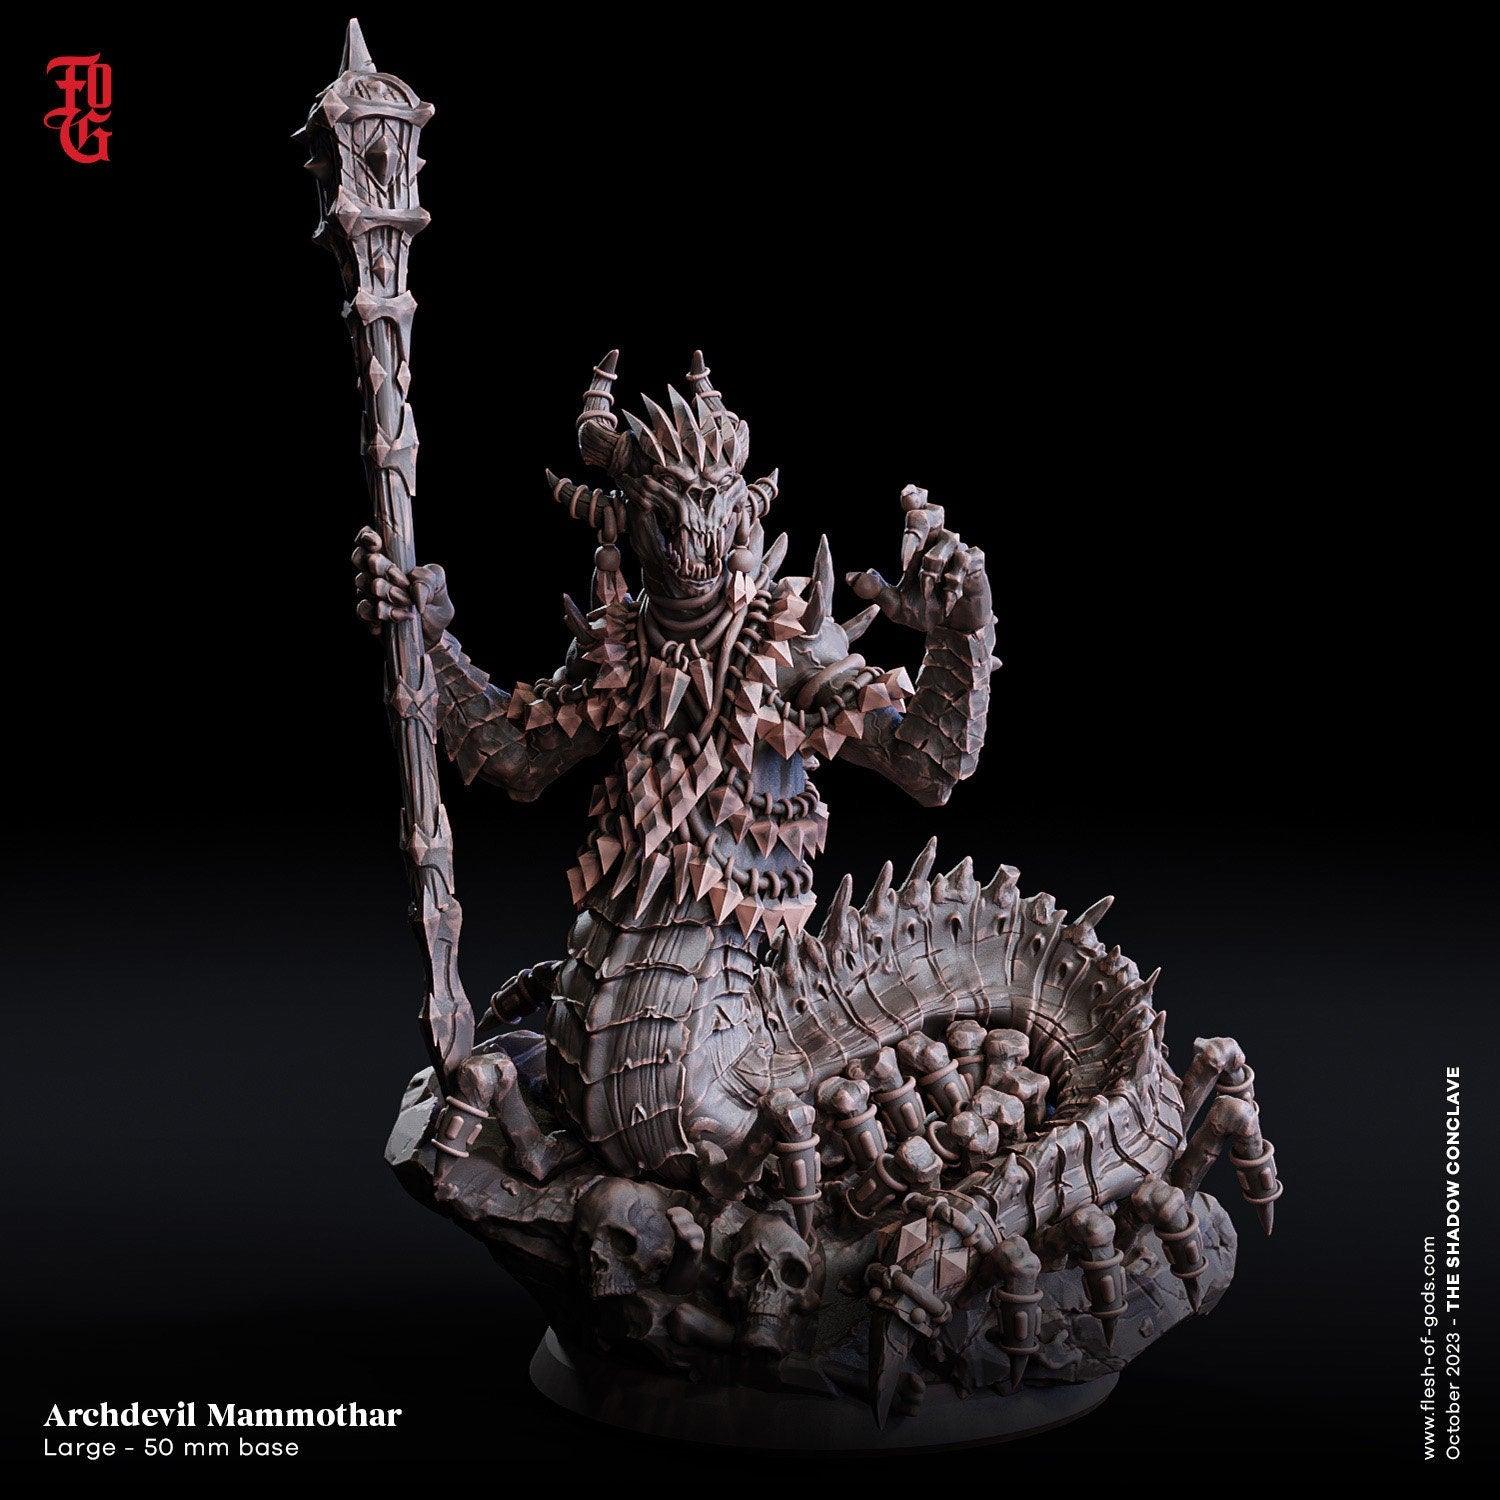 Archdevil Mammothar Miniature | Large Grotesque Fiend DnD Monster Figurine | 50mm Base - Plague Miniatures shop for DnD Miniatures